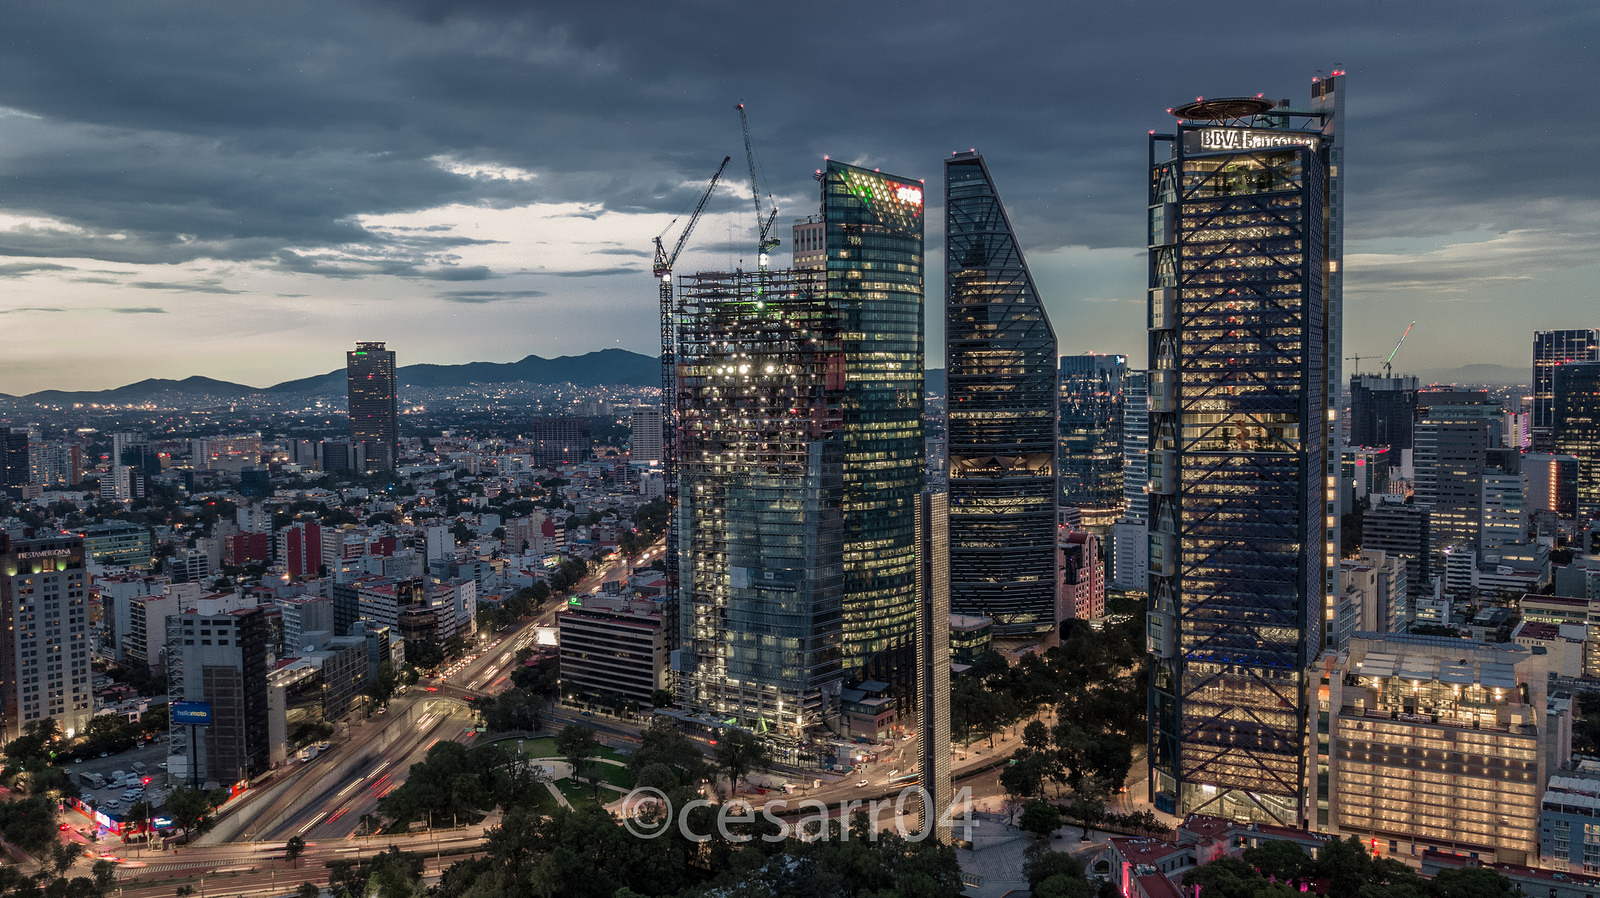 General 1600x898 Mexico City Mexico city cityscape street city lights